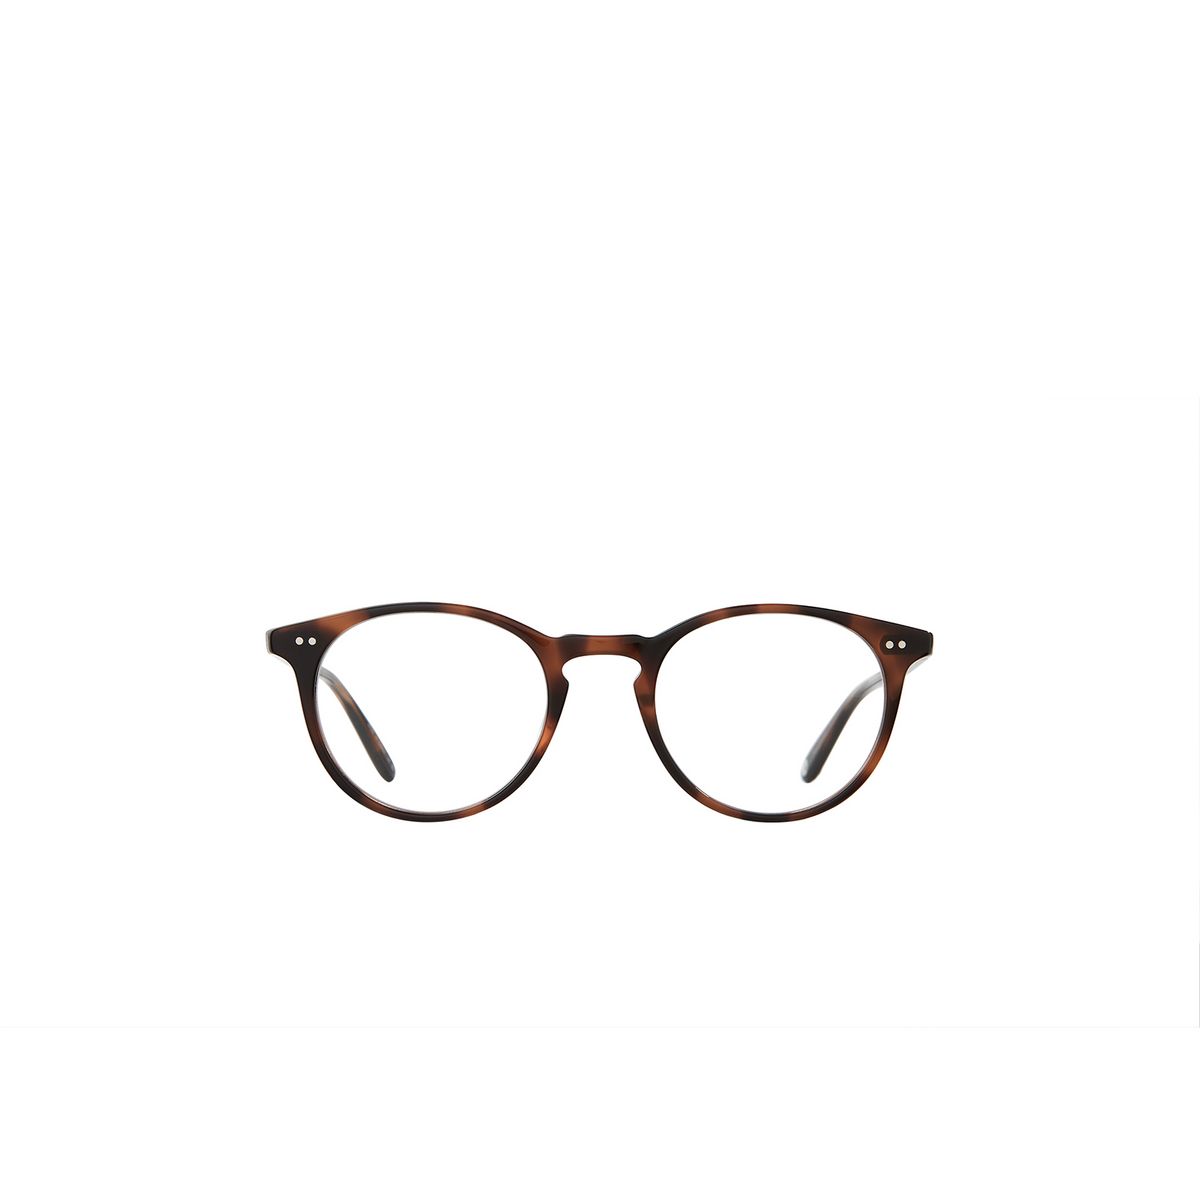 Garrett Leight WINWARD Eyeglasses SPBRNSH Spotted Brown Shell - front view